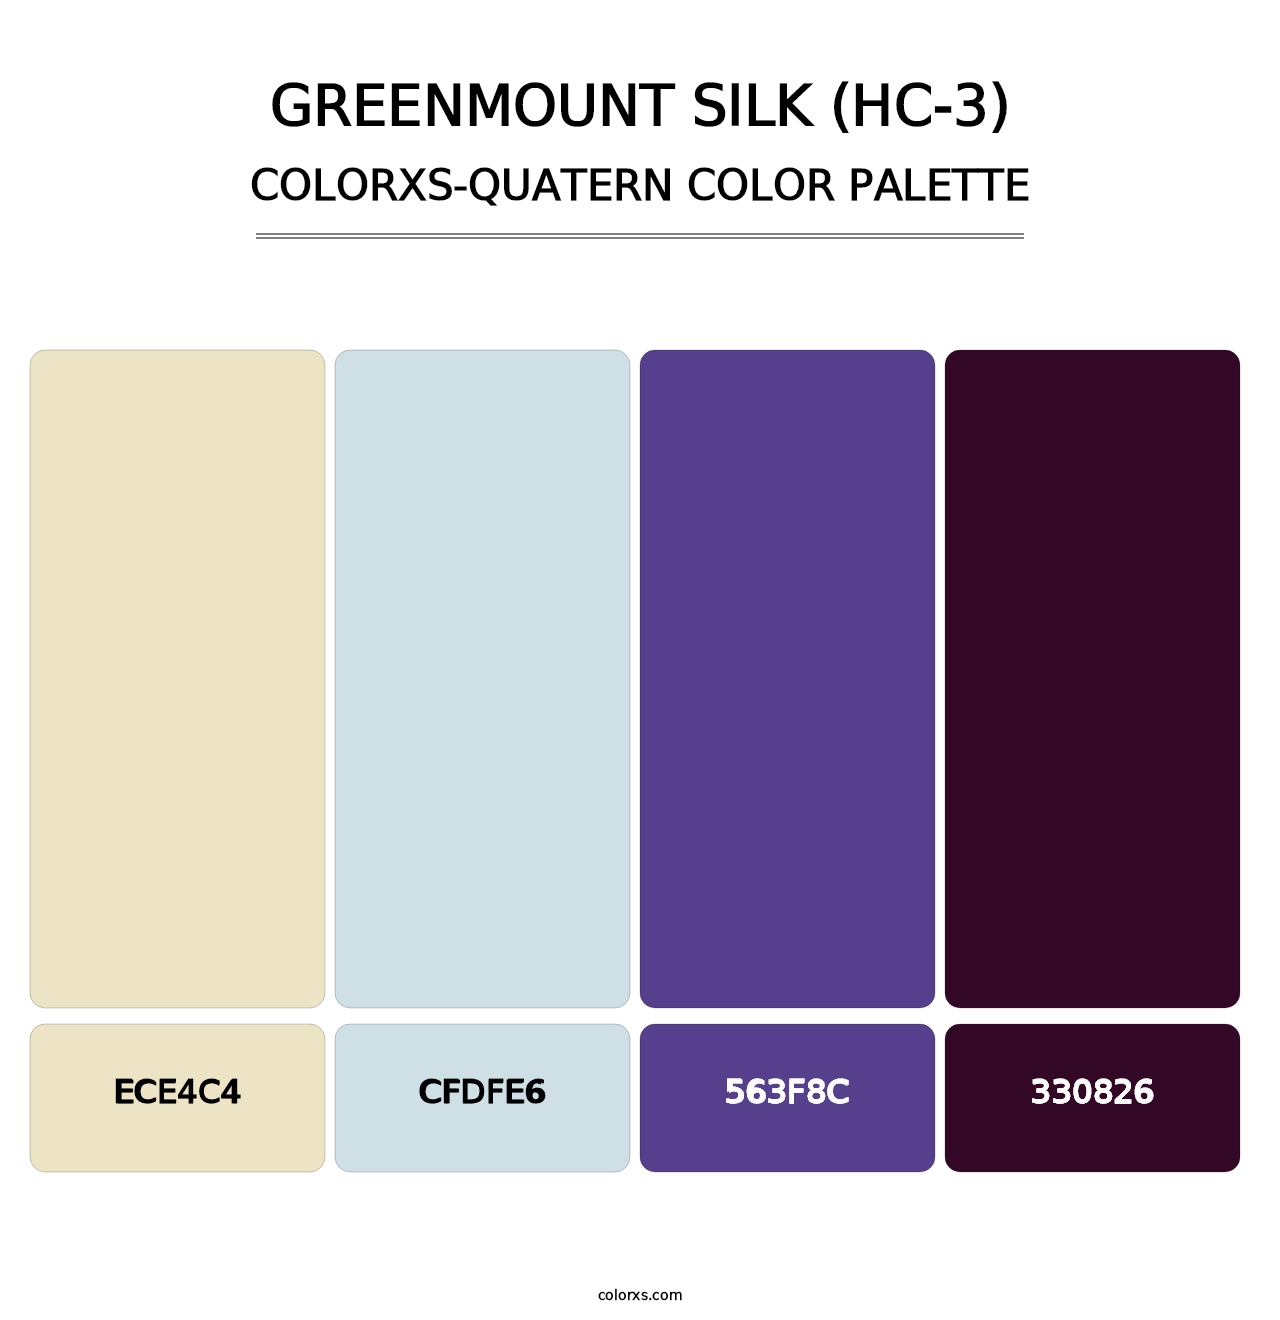 Greenmount Silk (HC-3) - Colorxs Quatern Palette